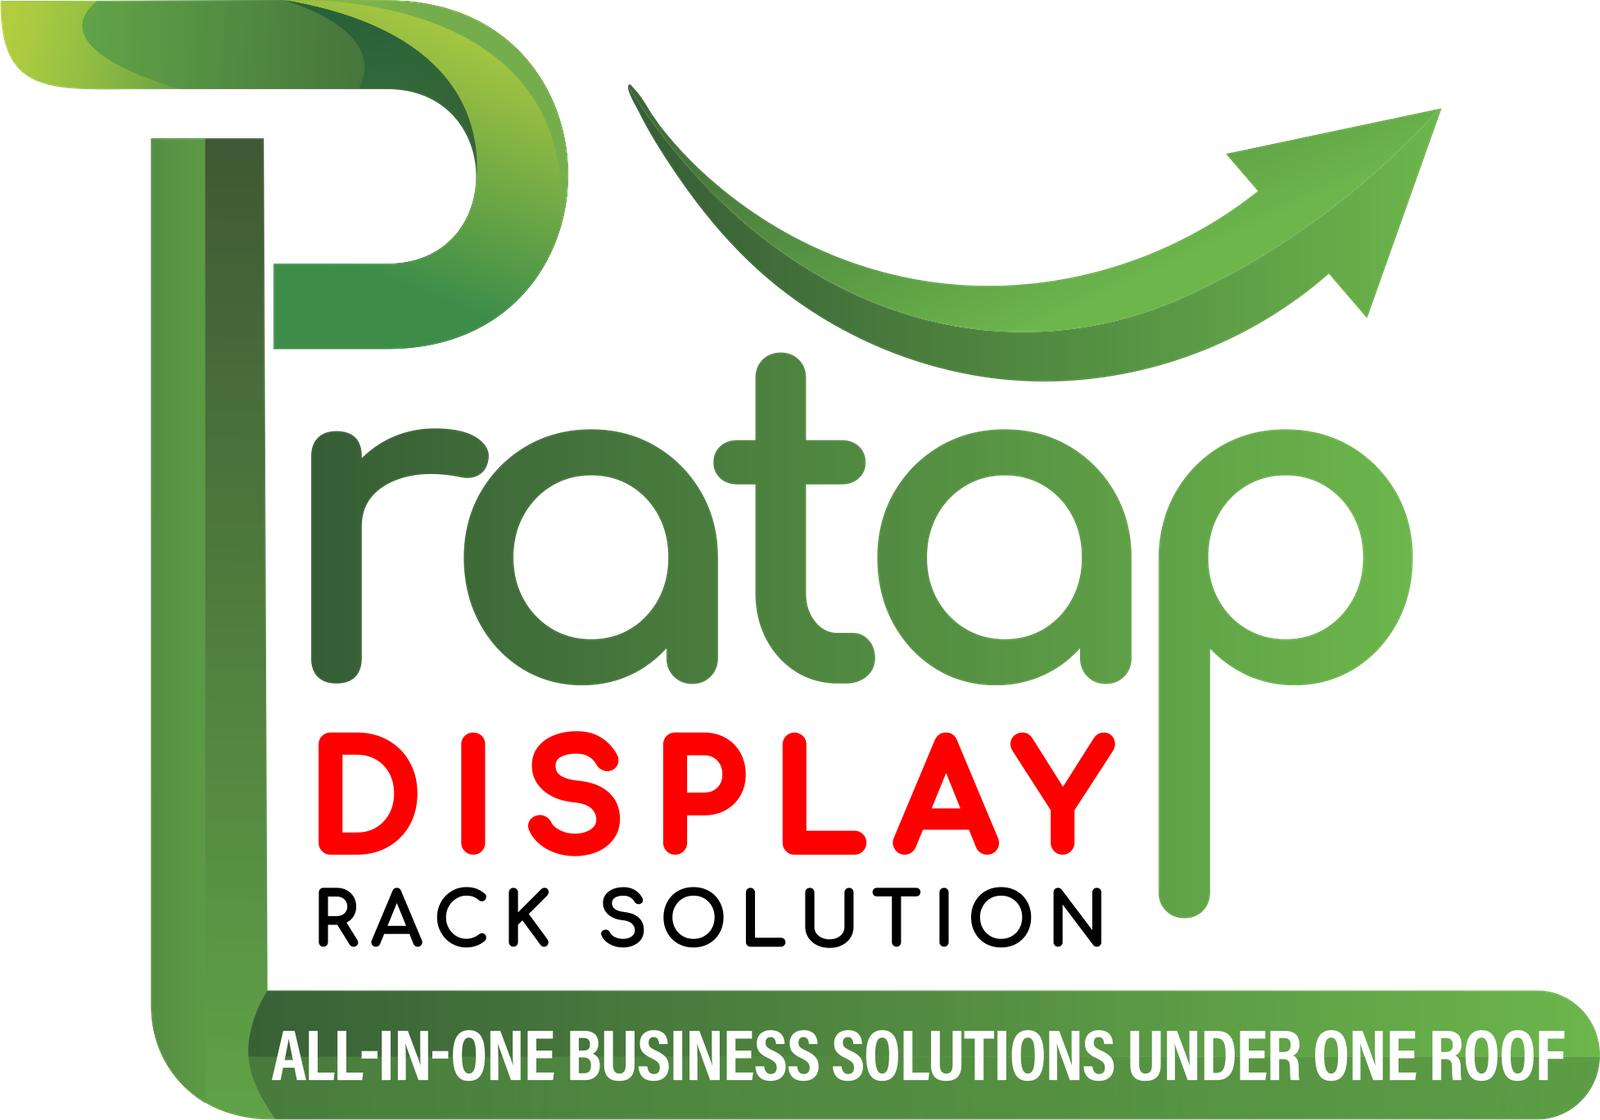 Pratap Display Rack Solutions